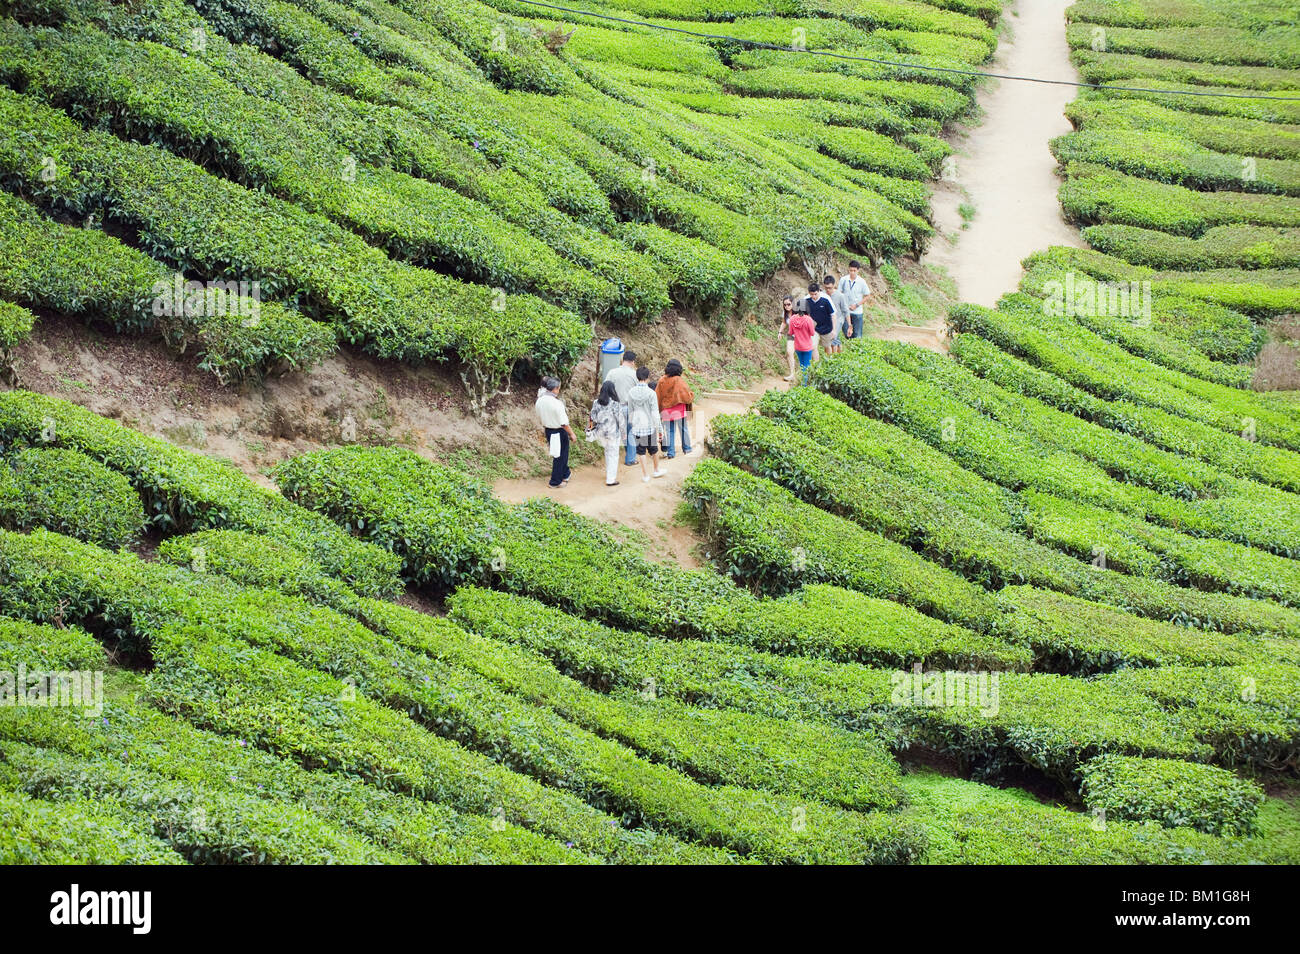 Tourists walking in a tea plantation, BOH Sungai Palas Tea Estate, Cameron Highlands, Perak state, Malaysia, Southeast Asia Stock Photo